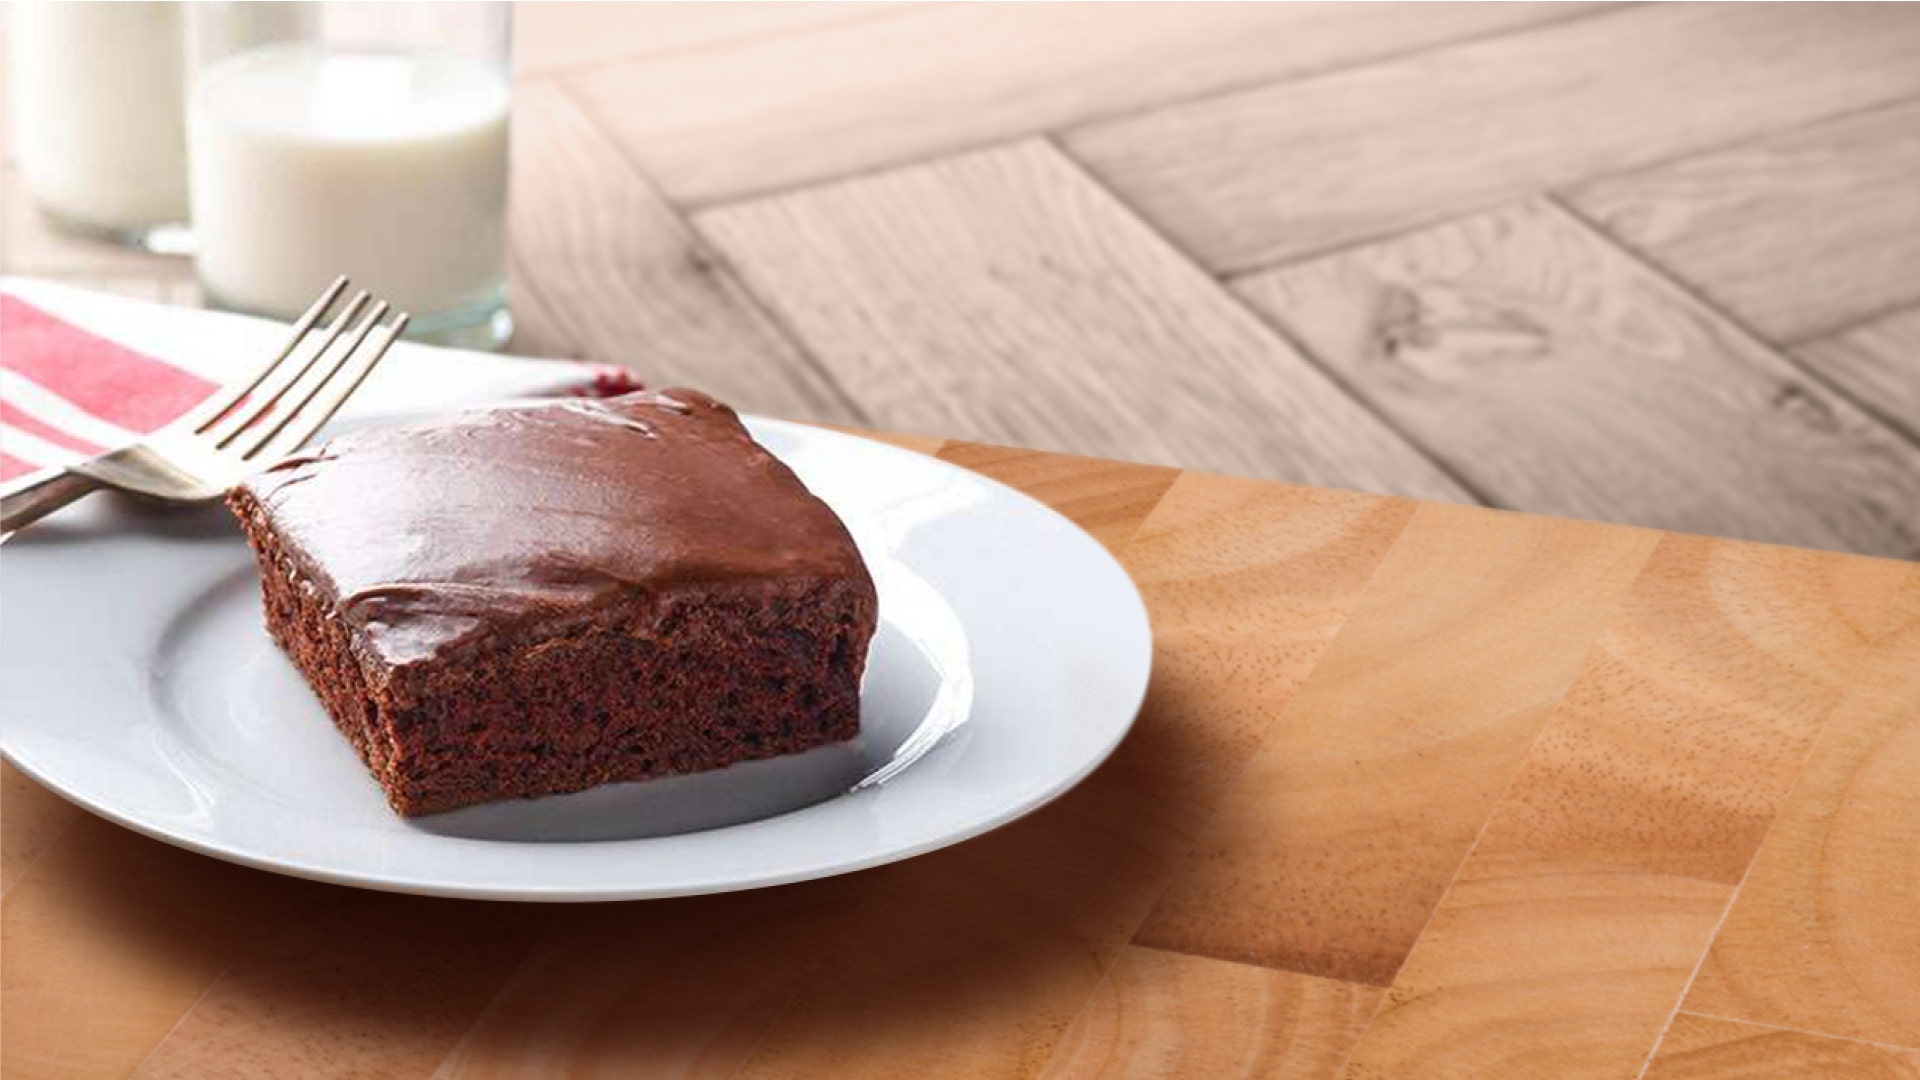 One Bowl Chocolate Cake Recipe